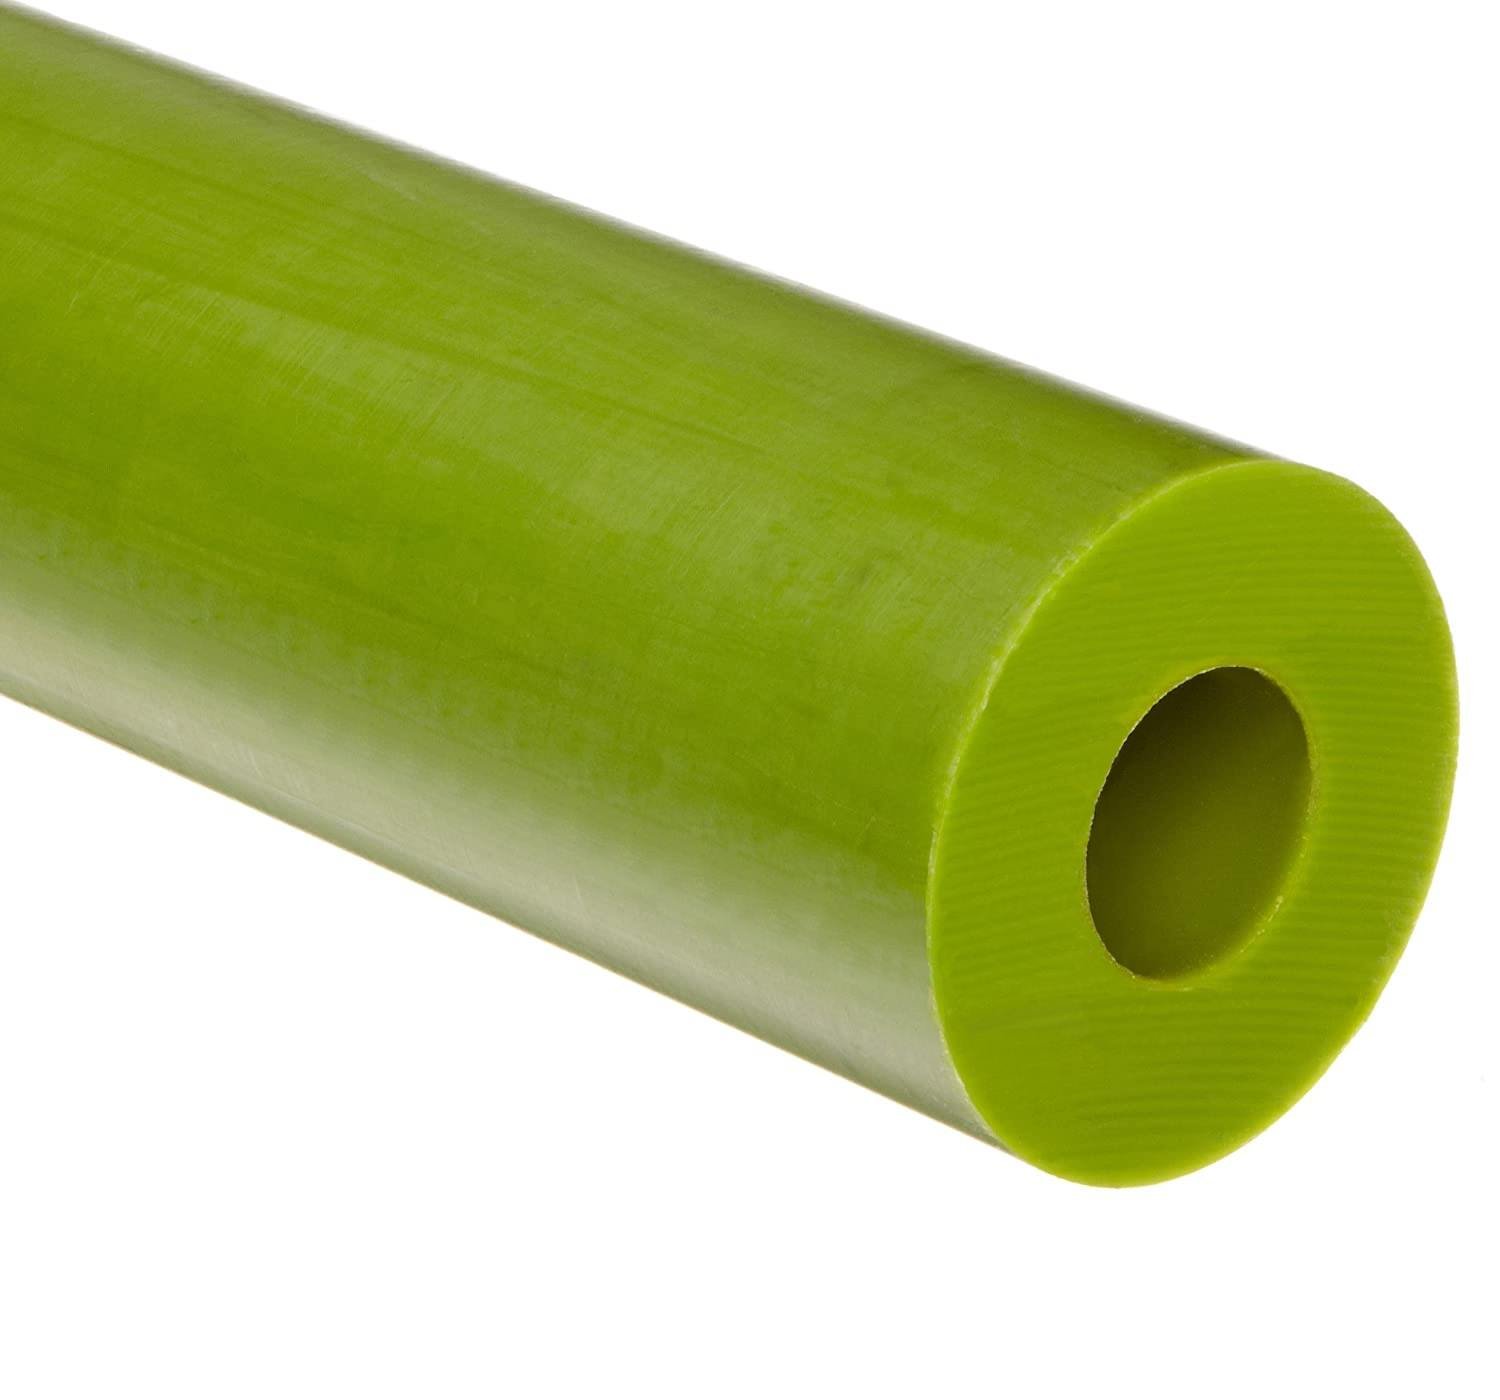 Nylon 6 Tube | Nyloil<sup>®</sup> Oil Filled Green Nylon Tube